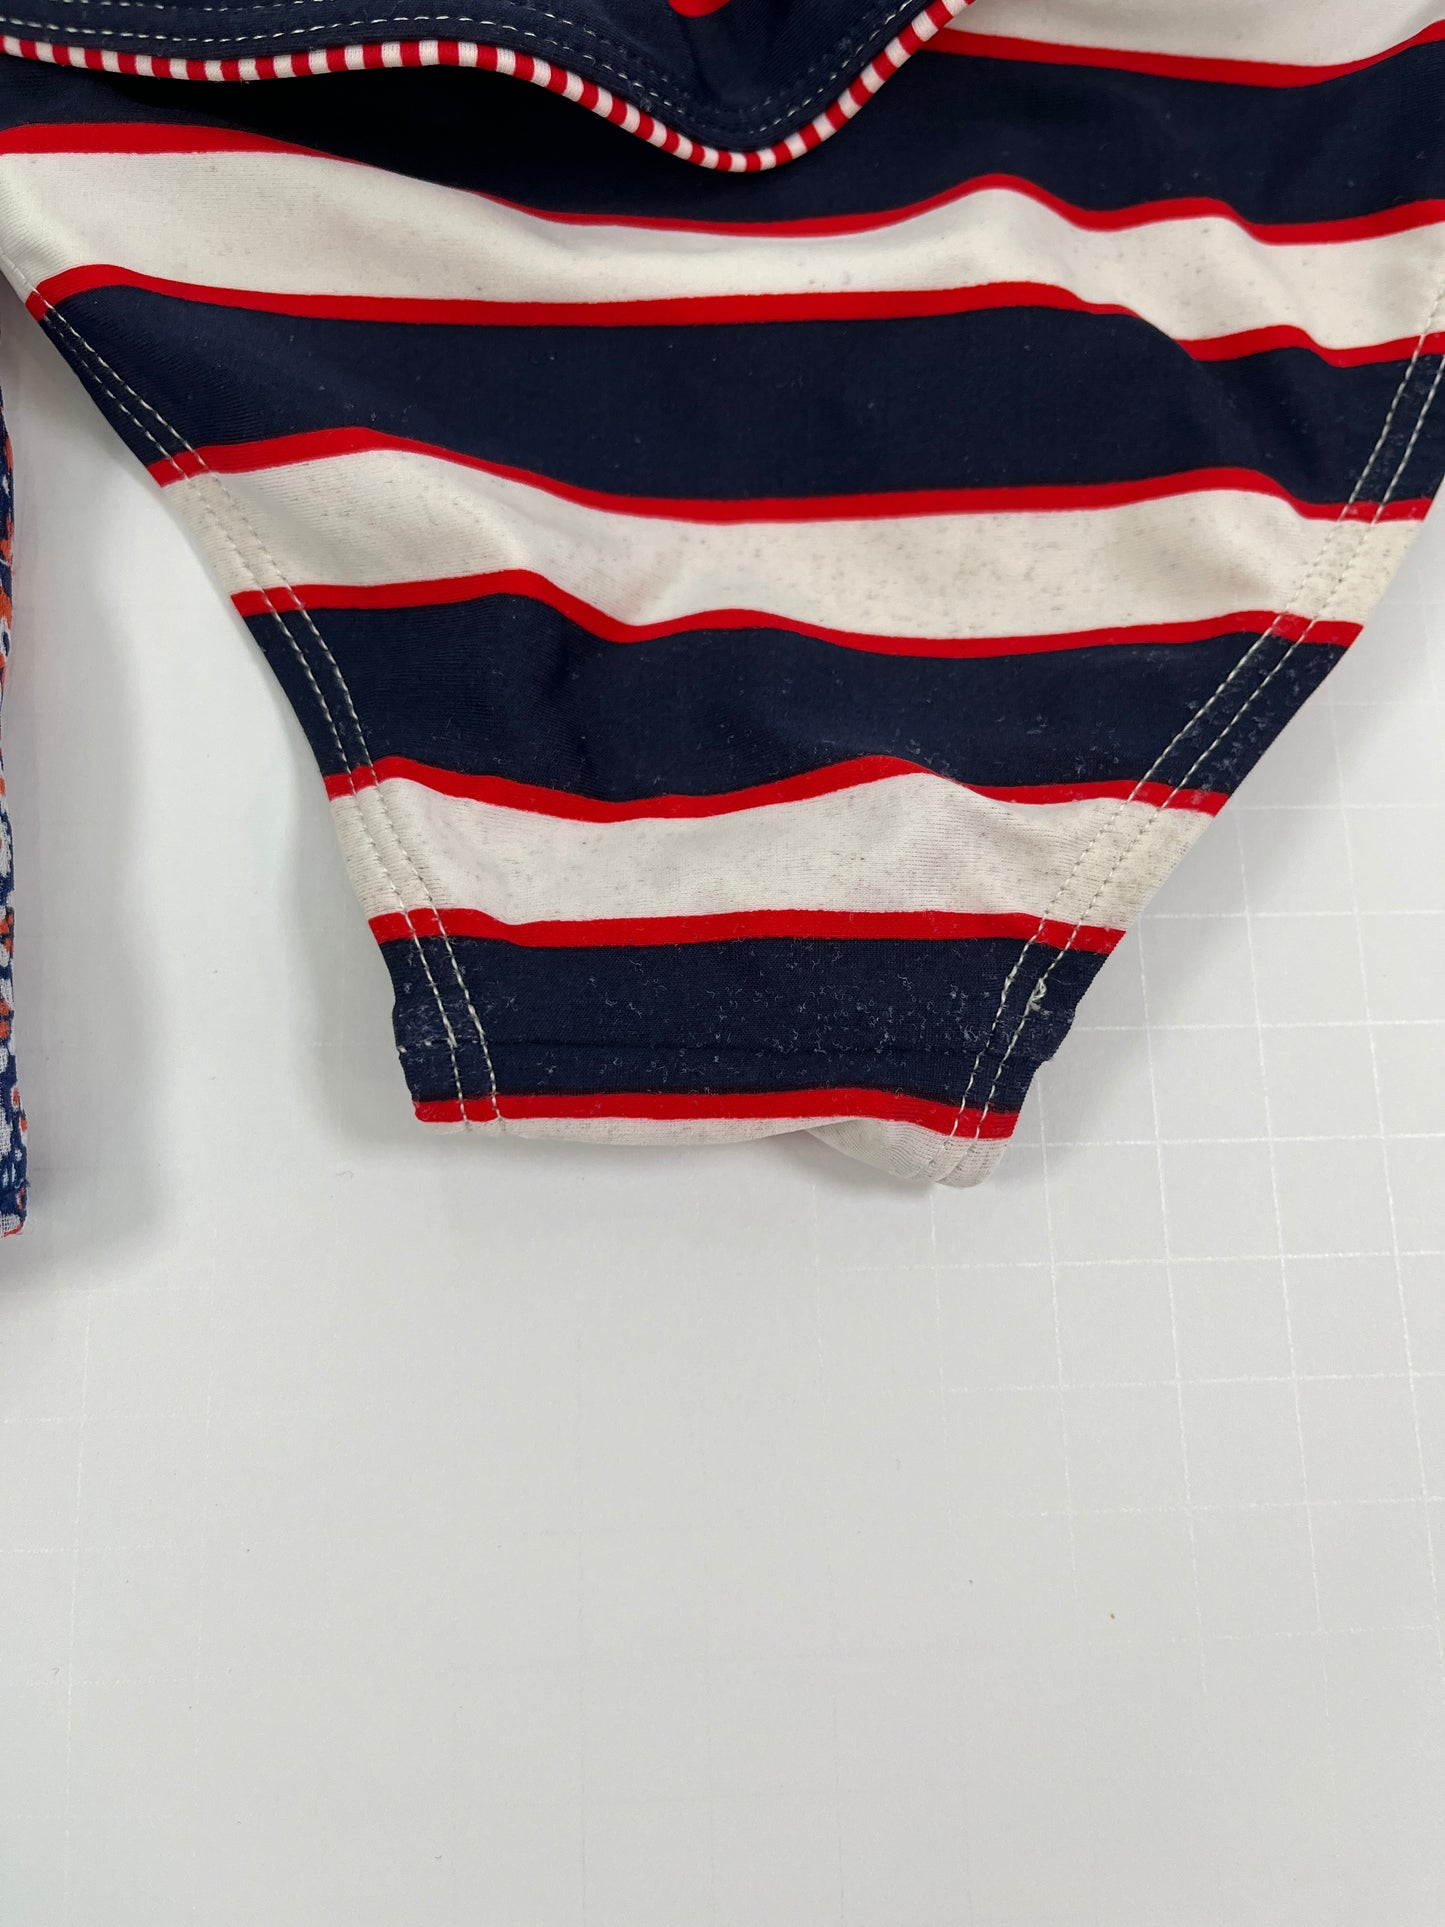 PPU 45242 3T girls red/white/blue dress + swimsuit bundle